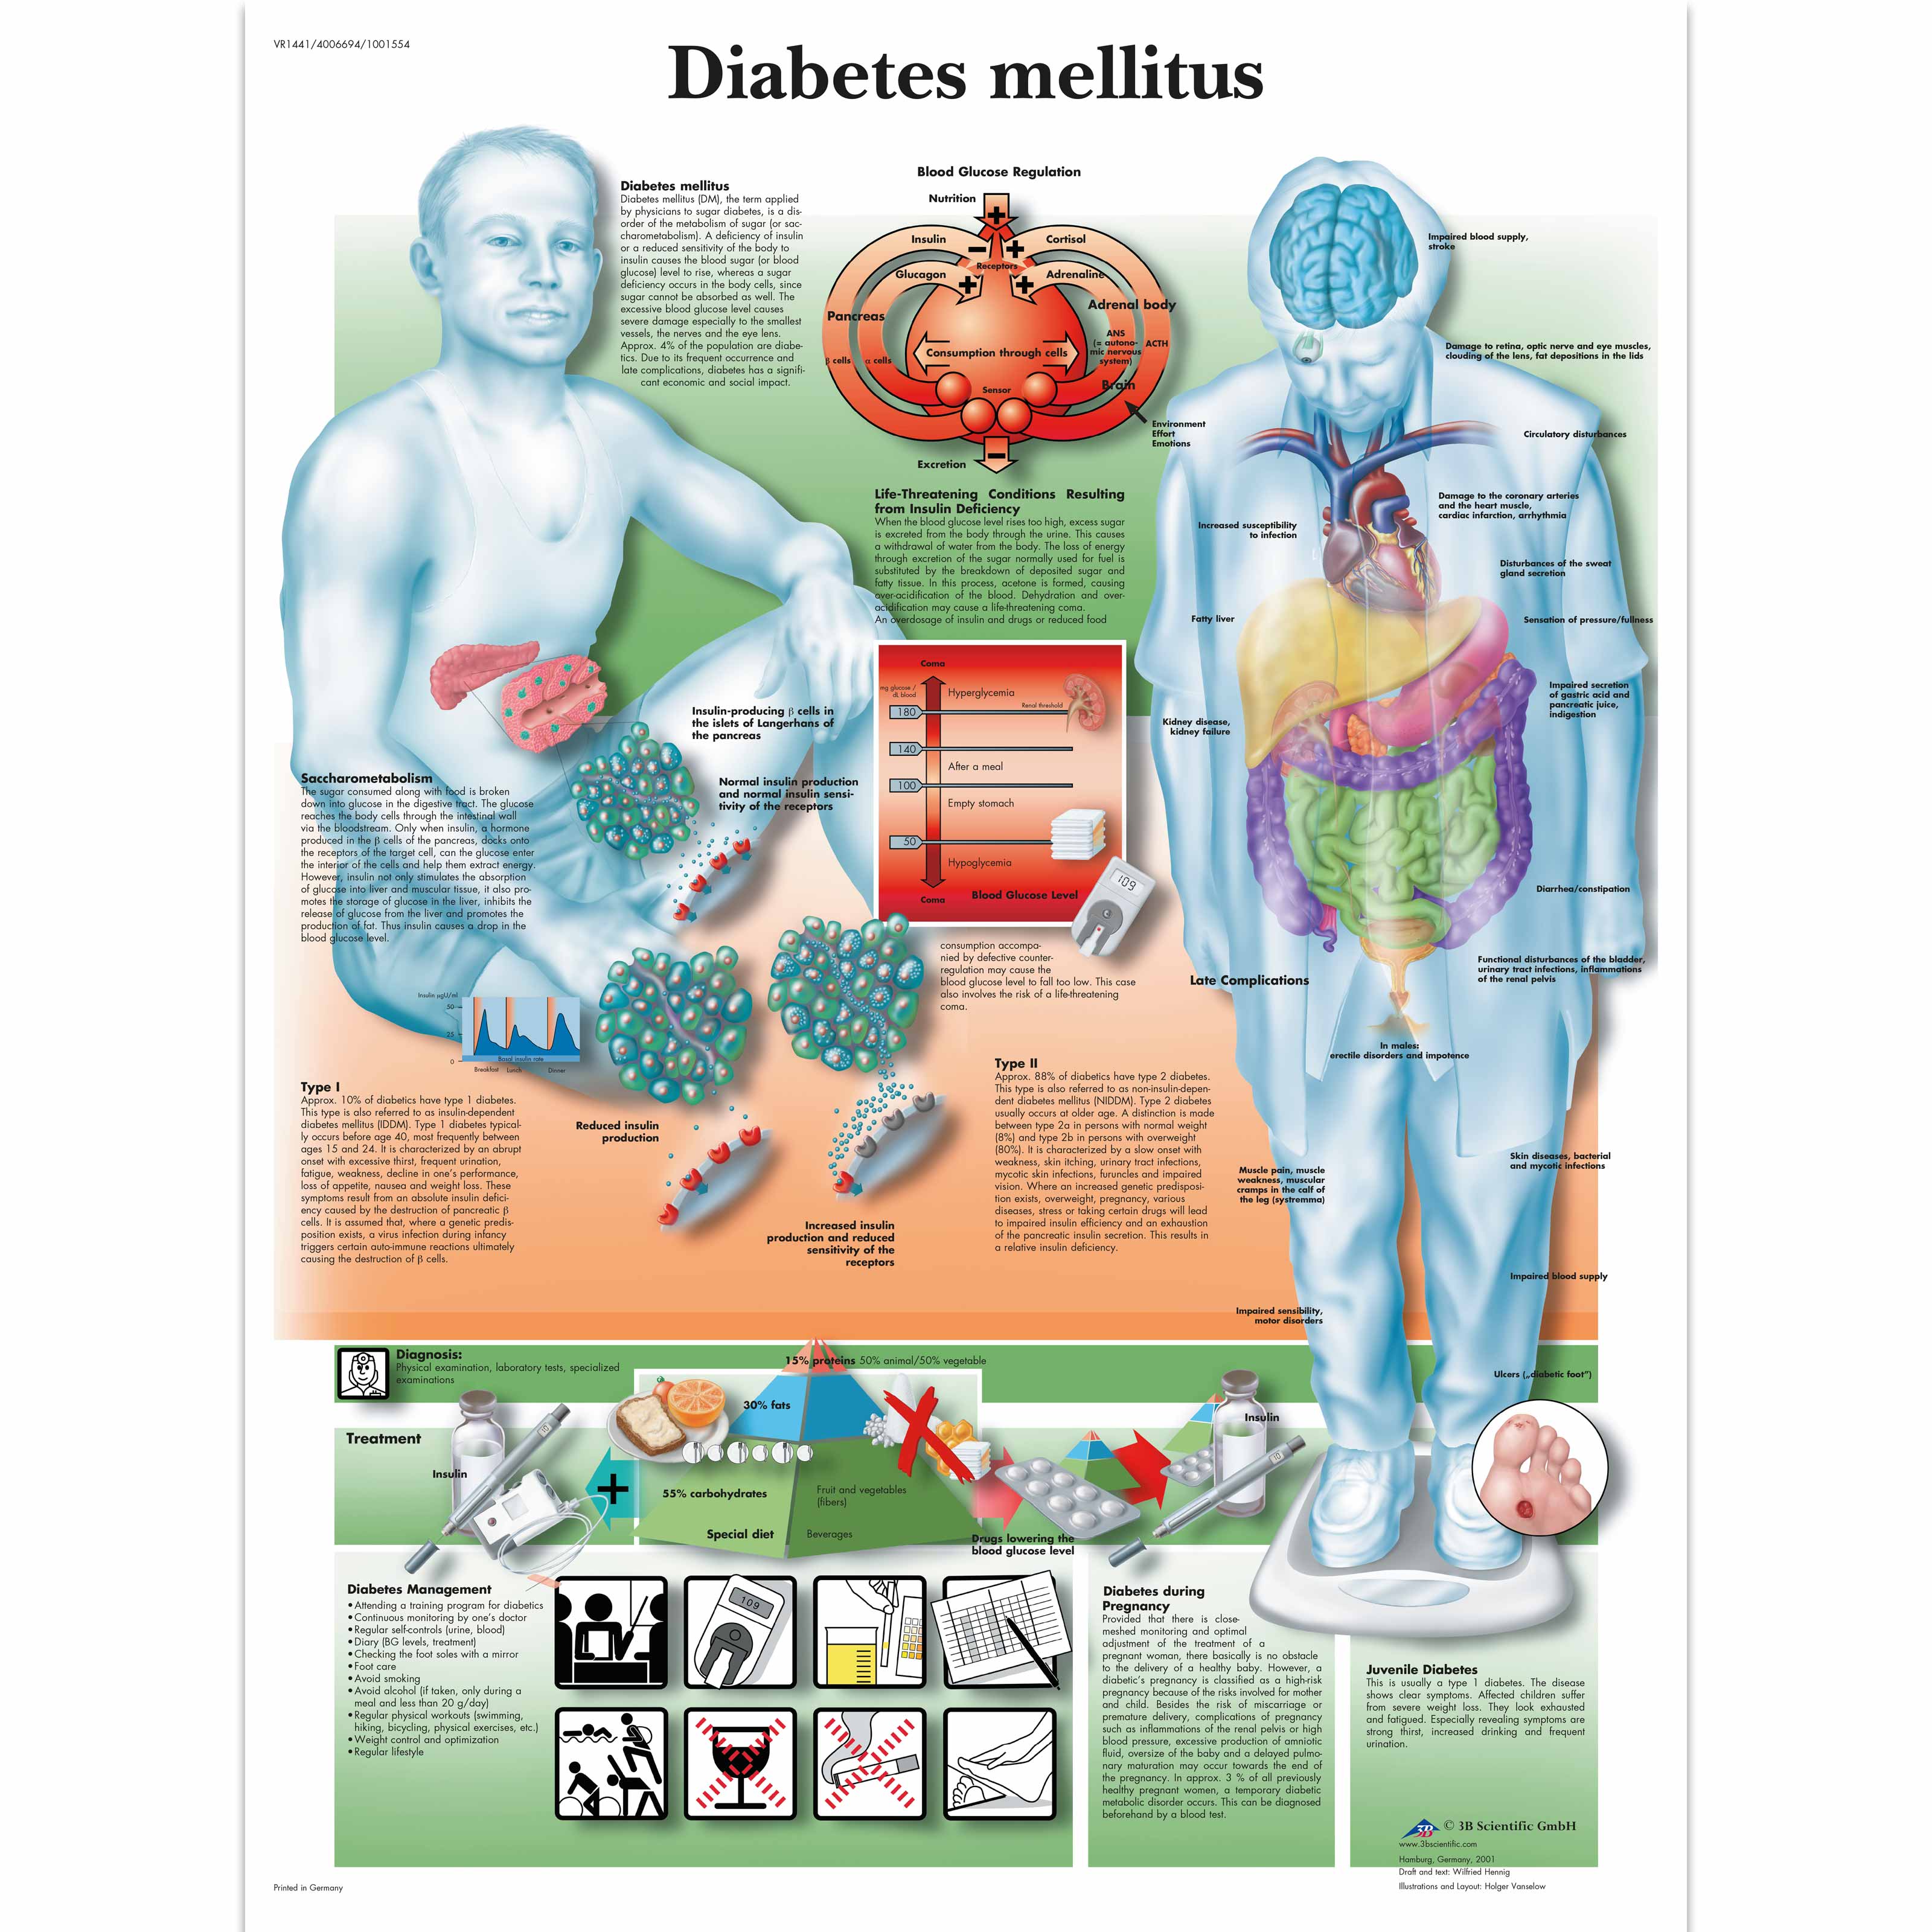 what is the presentation of diabetes mellitus